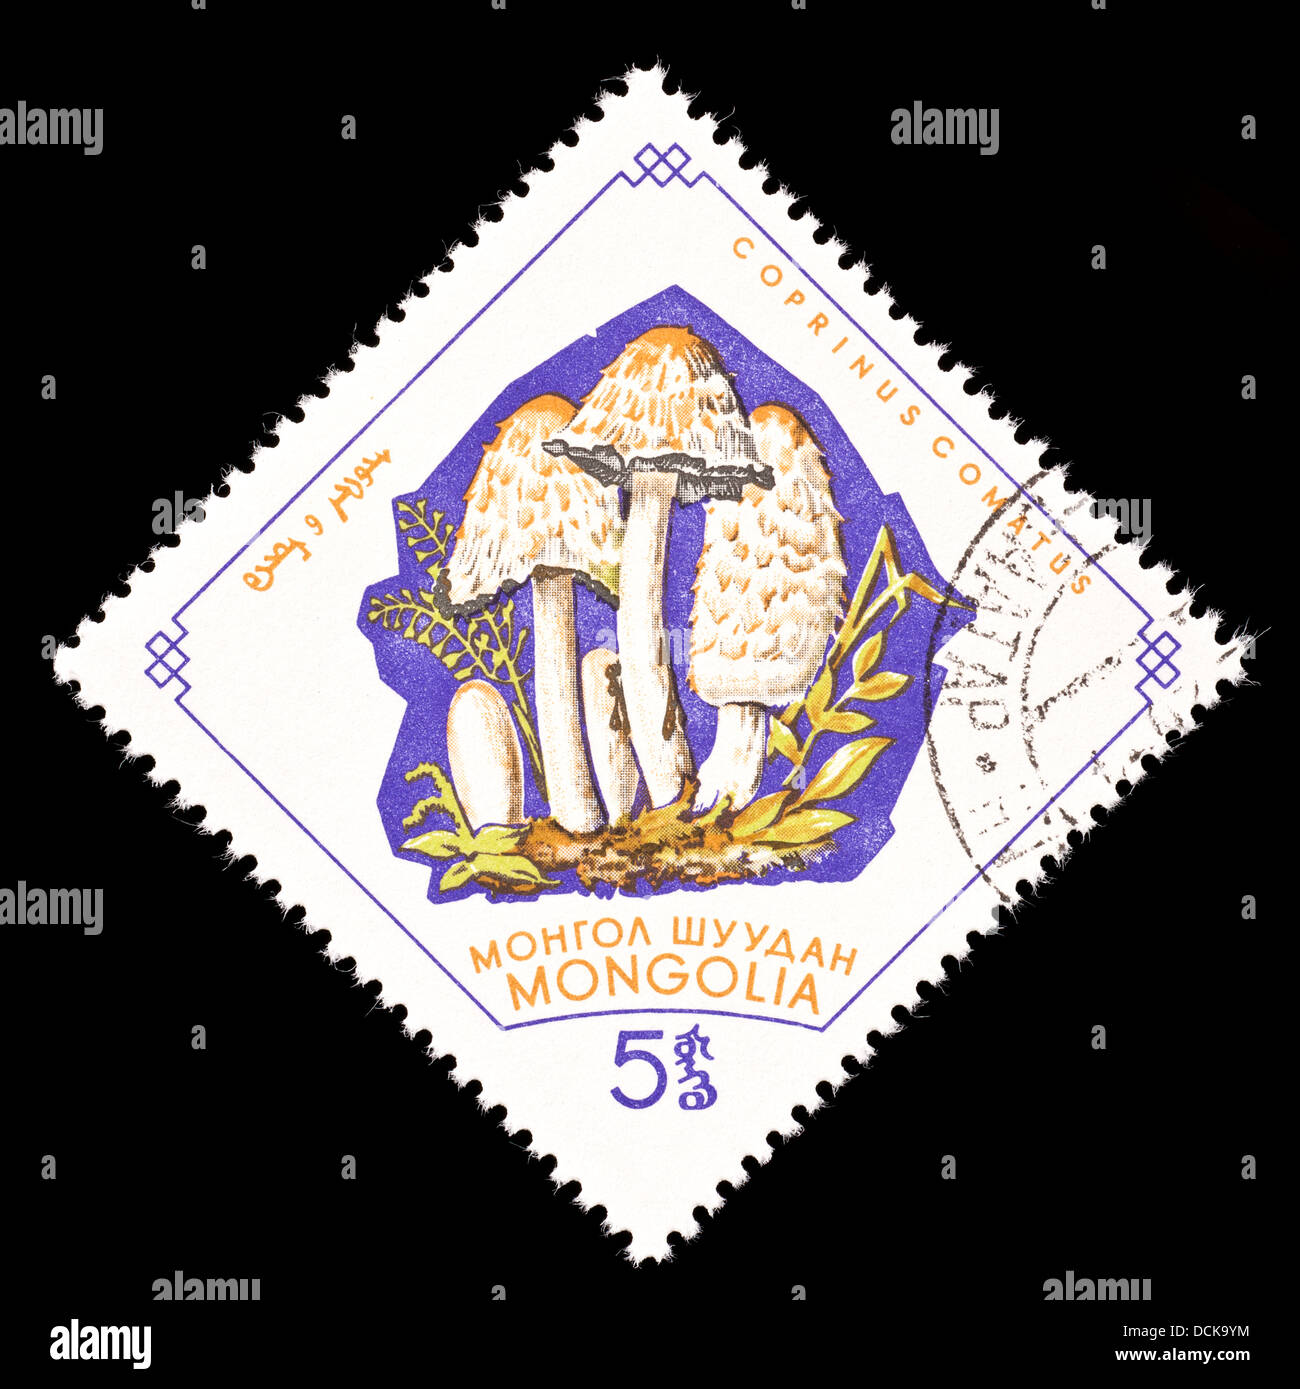 Postage stamp from Mongolia depicting a shaggy mane mushroom (Coprinus comatus) Stock Photo